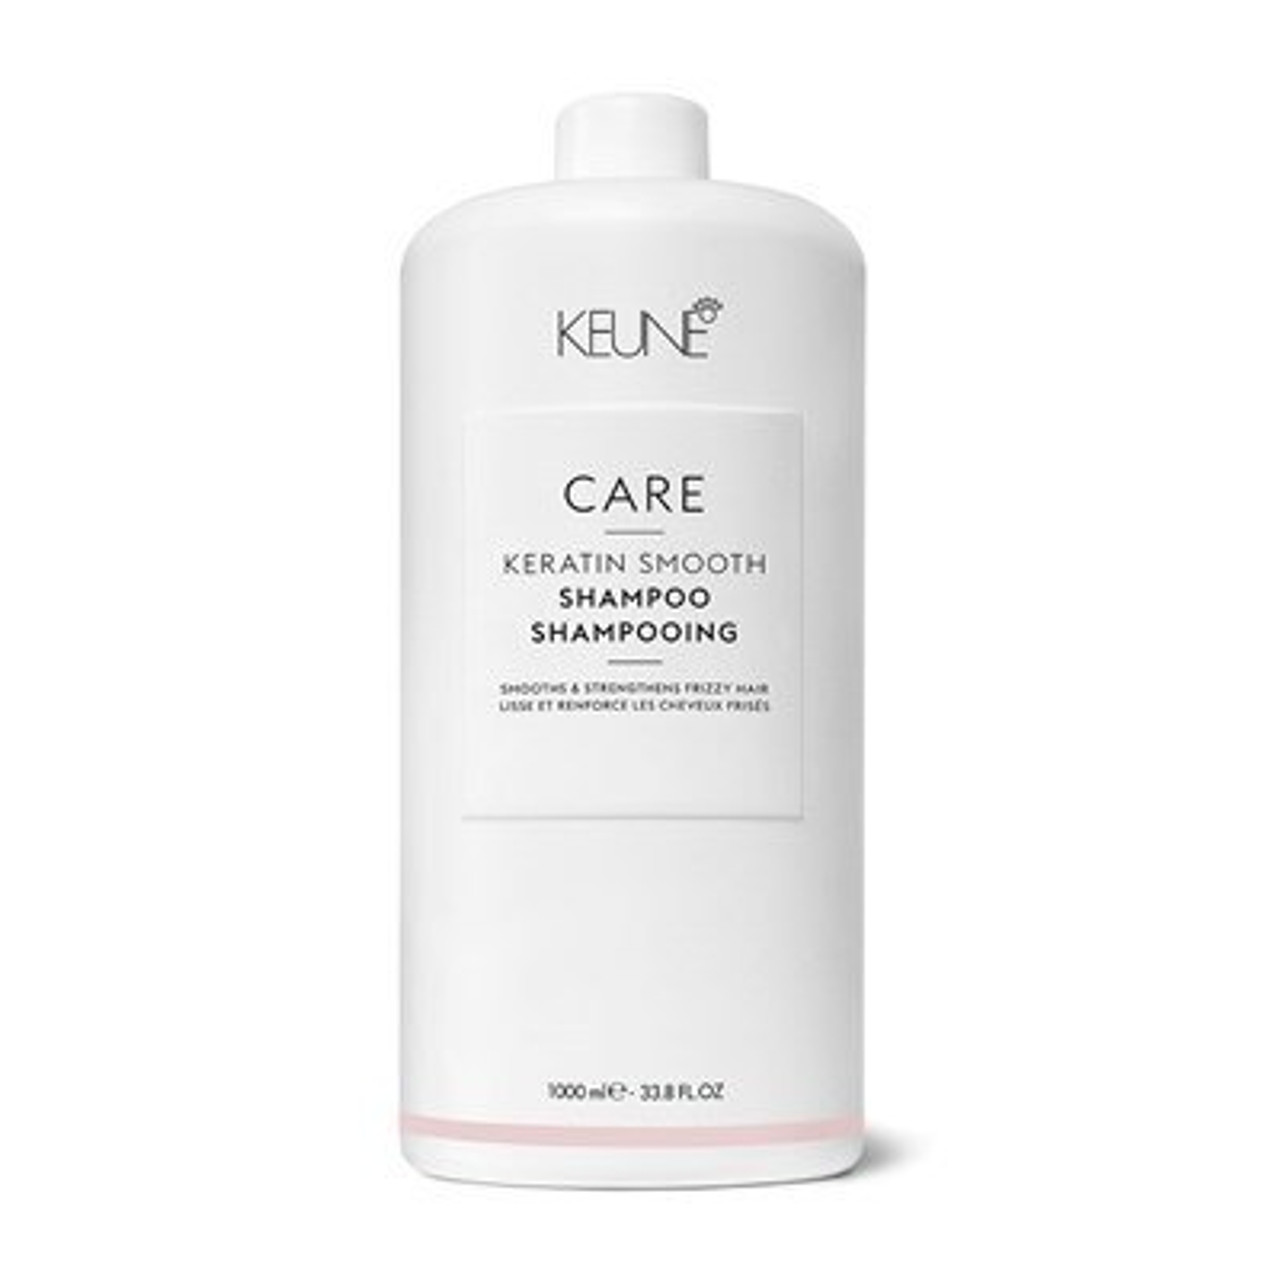 Keune Care Smoothing Shampoo SleekShop.com